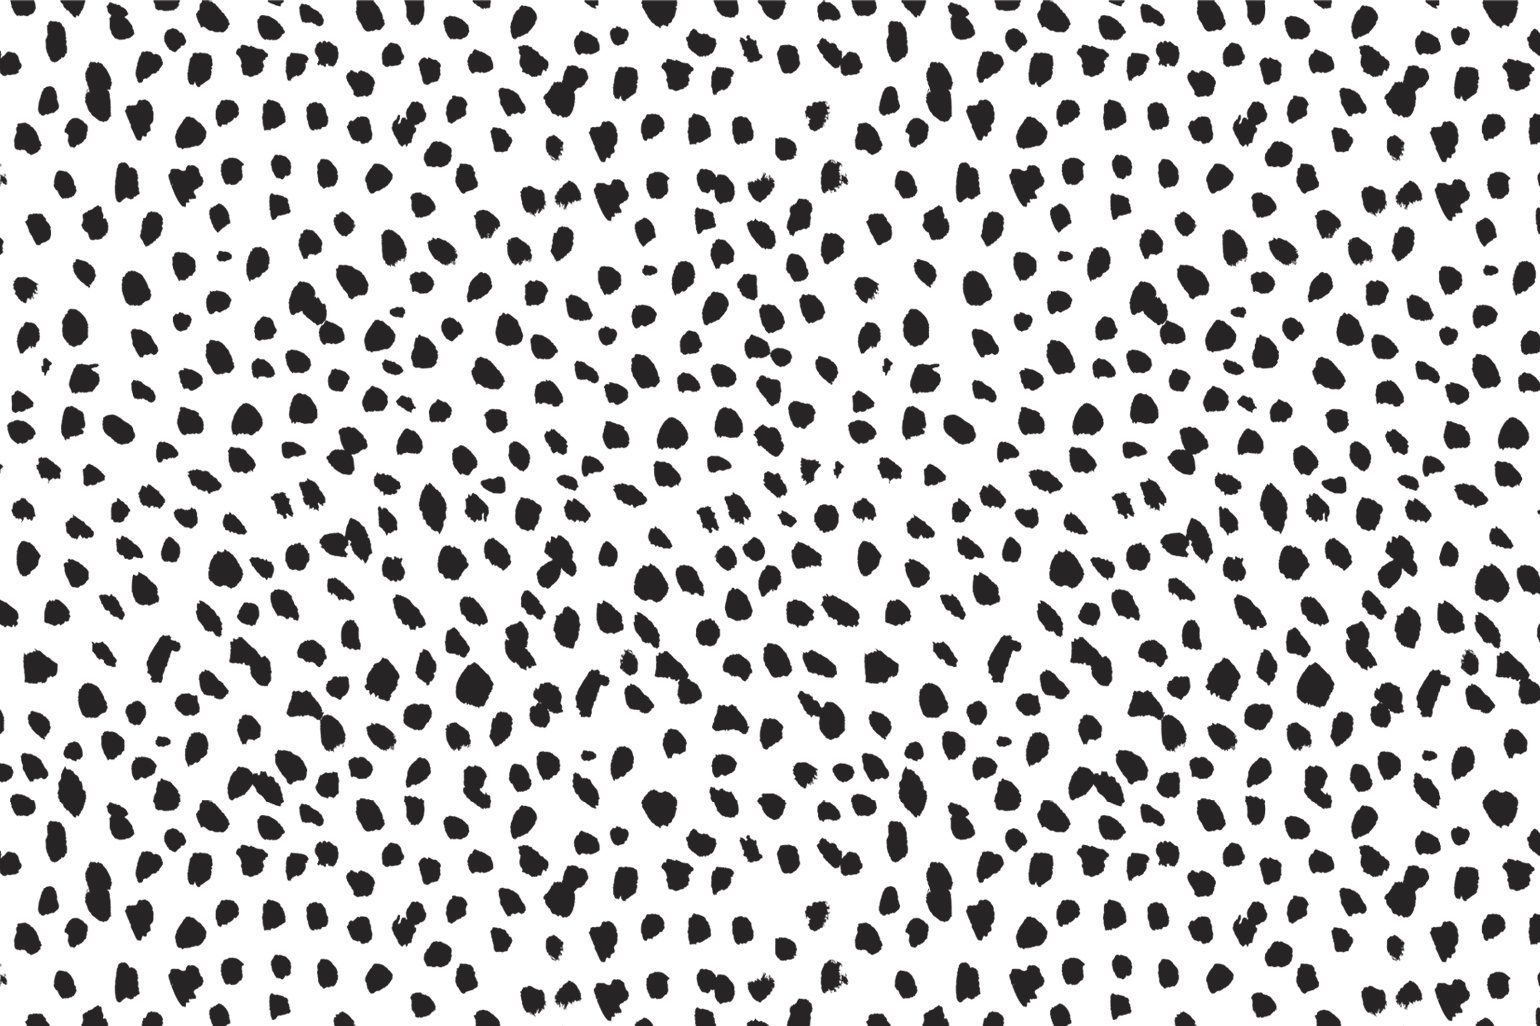 Black & White Dalmatian Print Wallpaper Mural. Hovia UK. Cheetah print wallpaper, Print wallpaper, Dalmatian